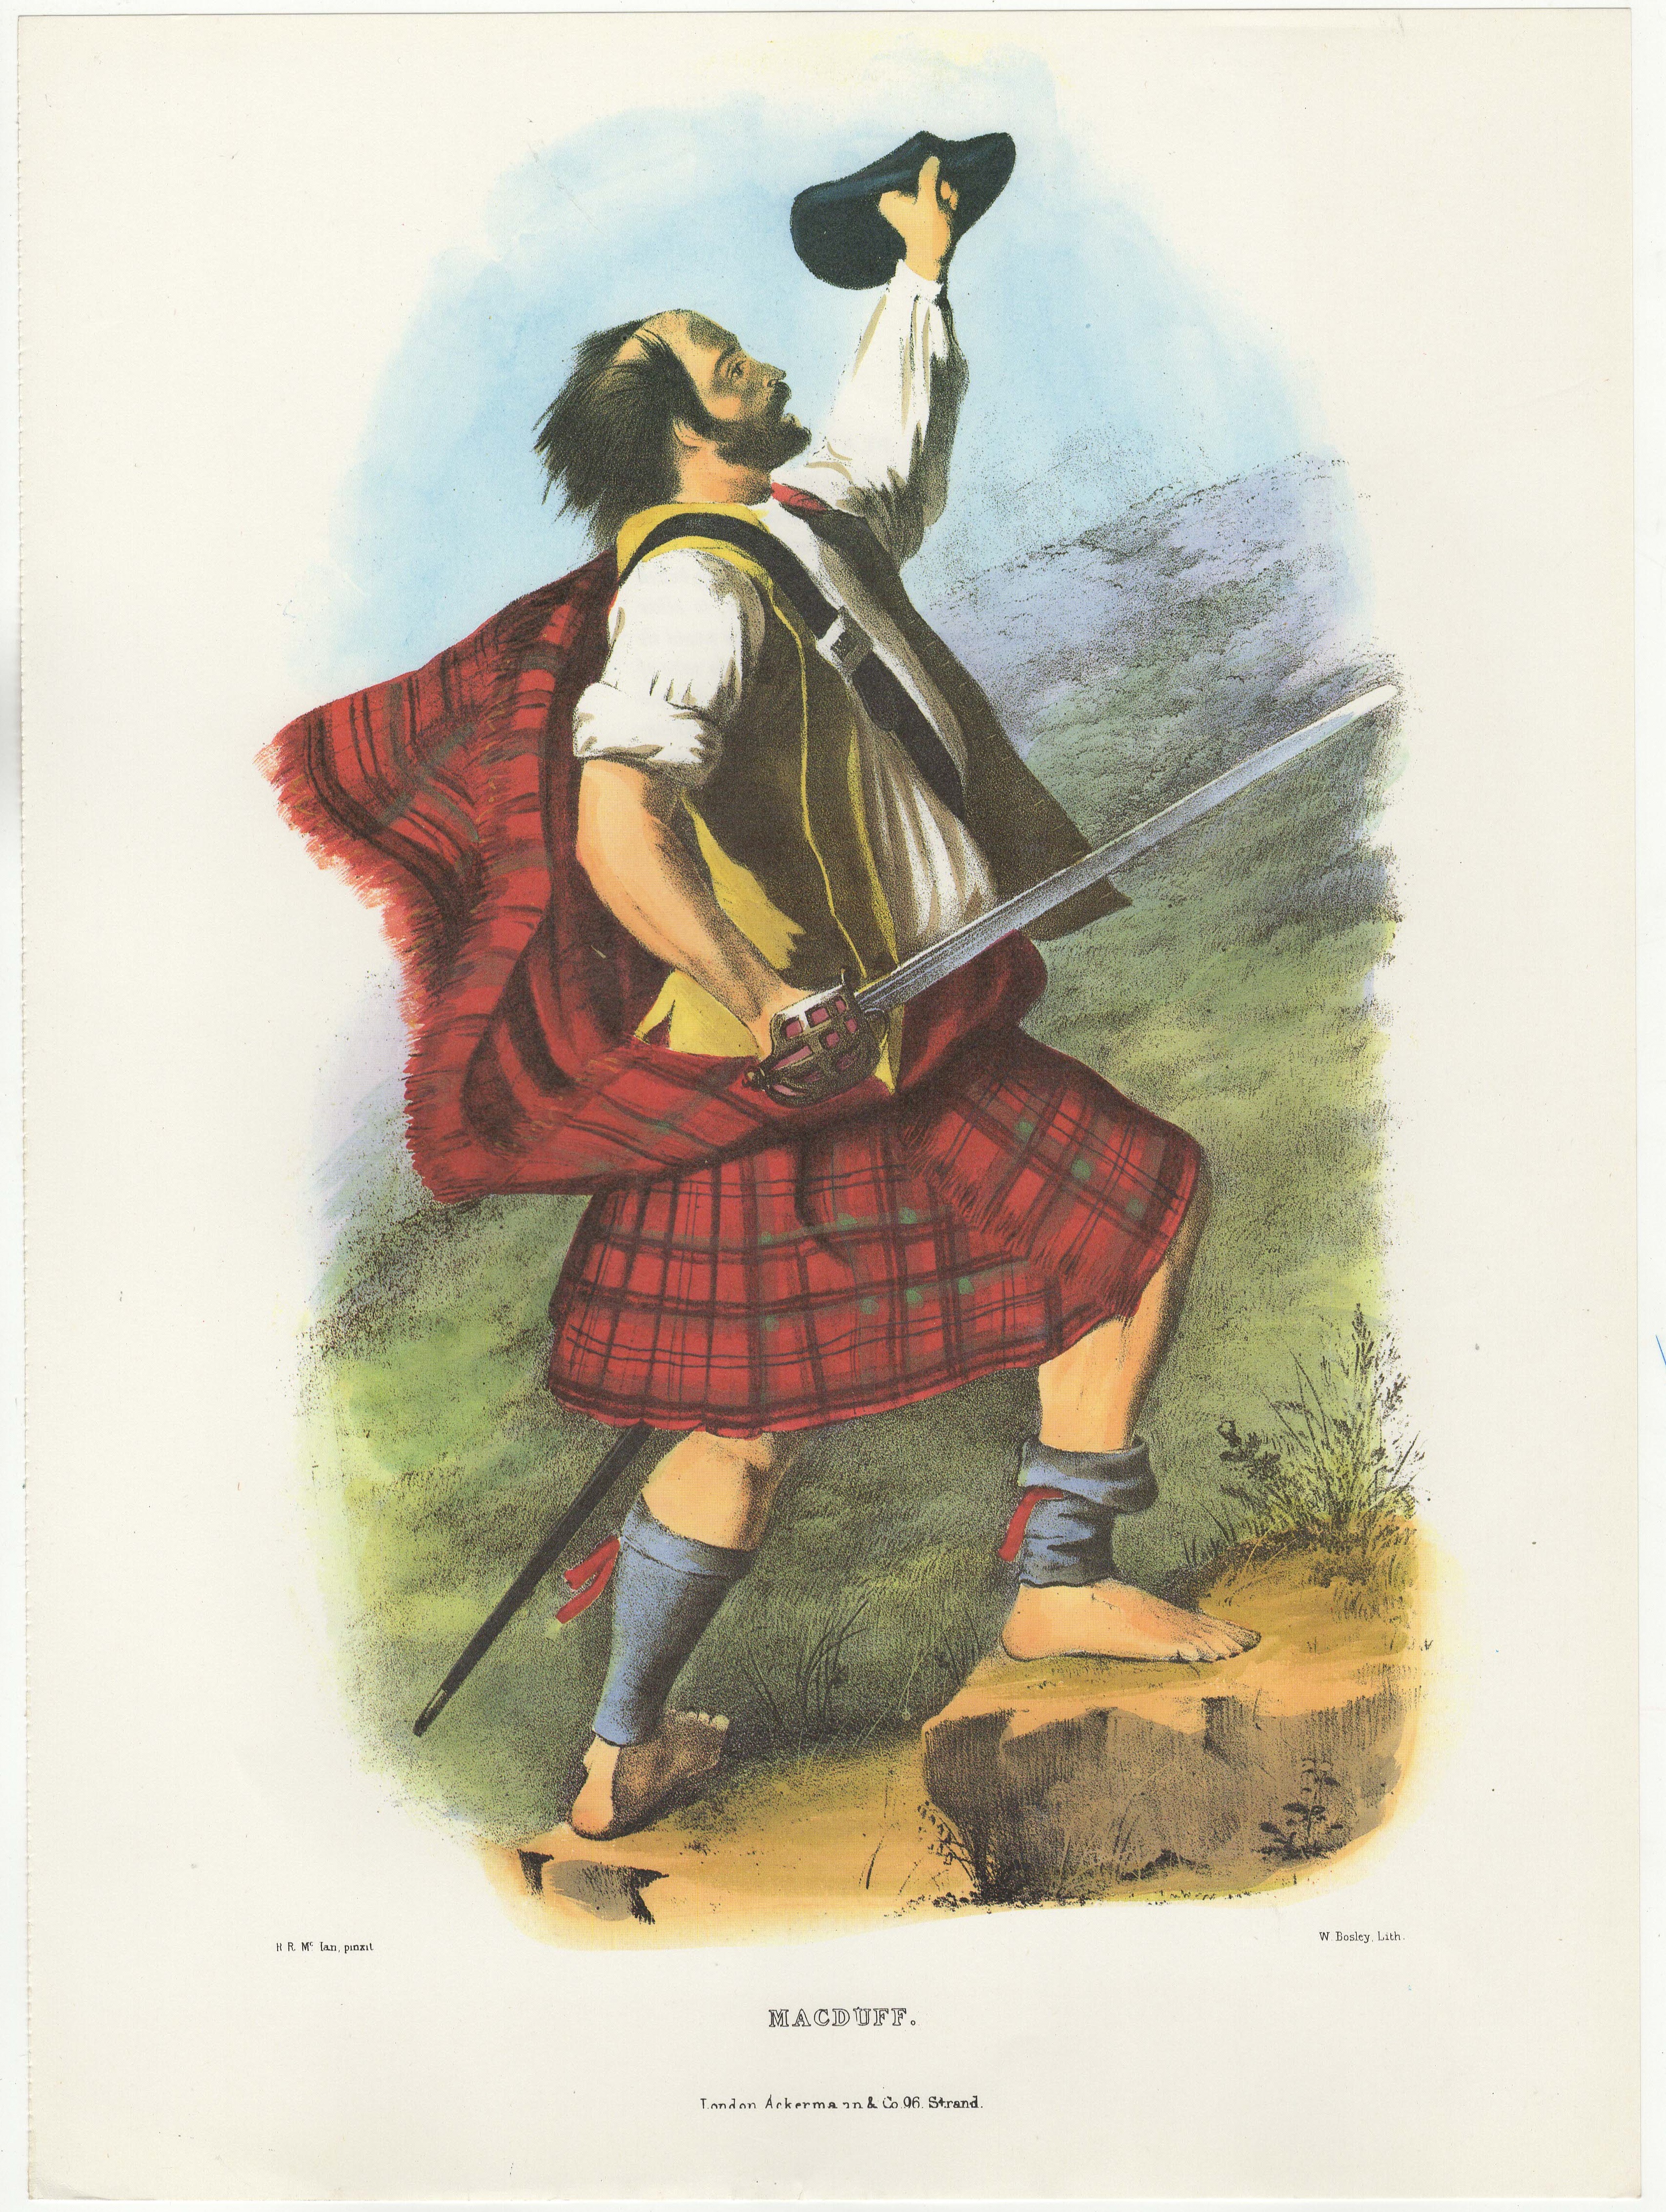 Ackerman Vintage colour print-Clan Macduff R.R Mc Ian, printer W.Bosley Litho 11" x 15" approx.